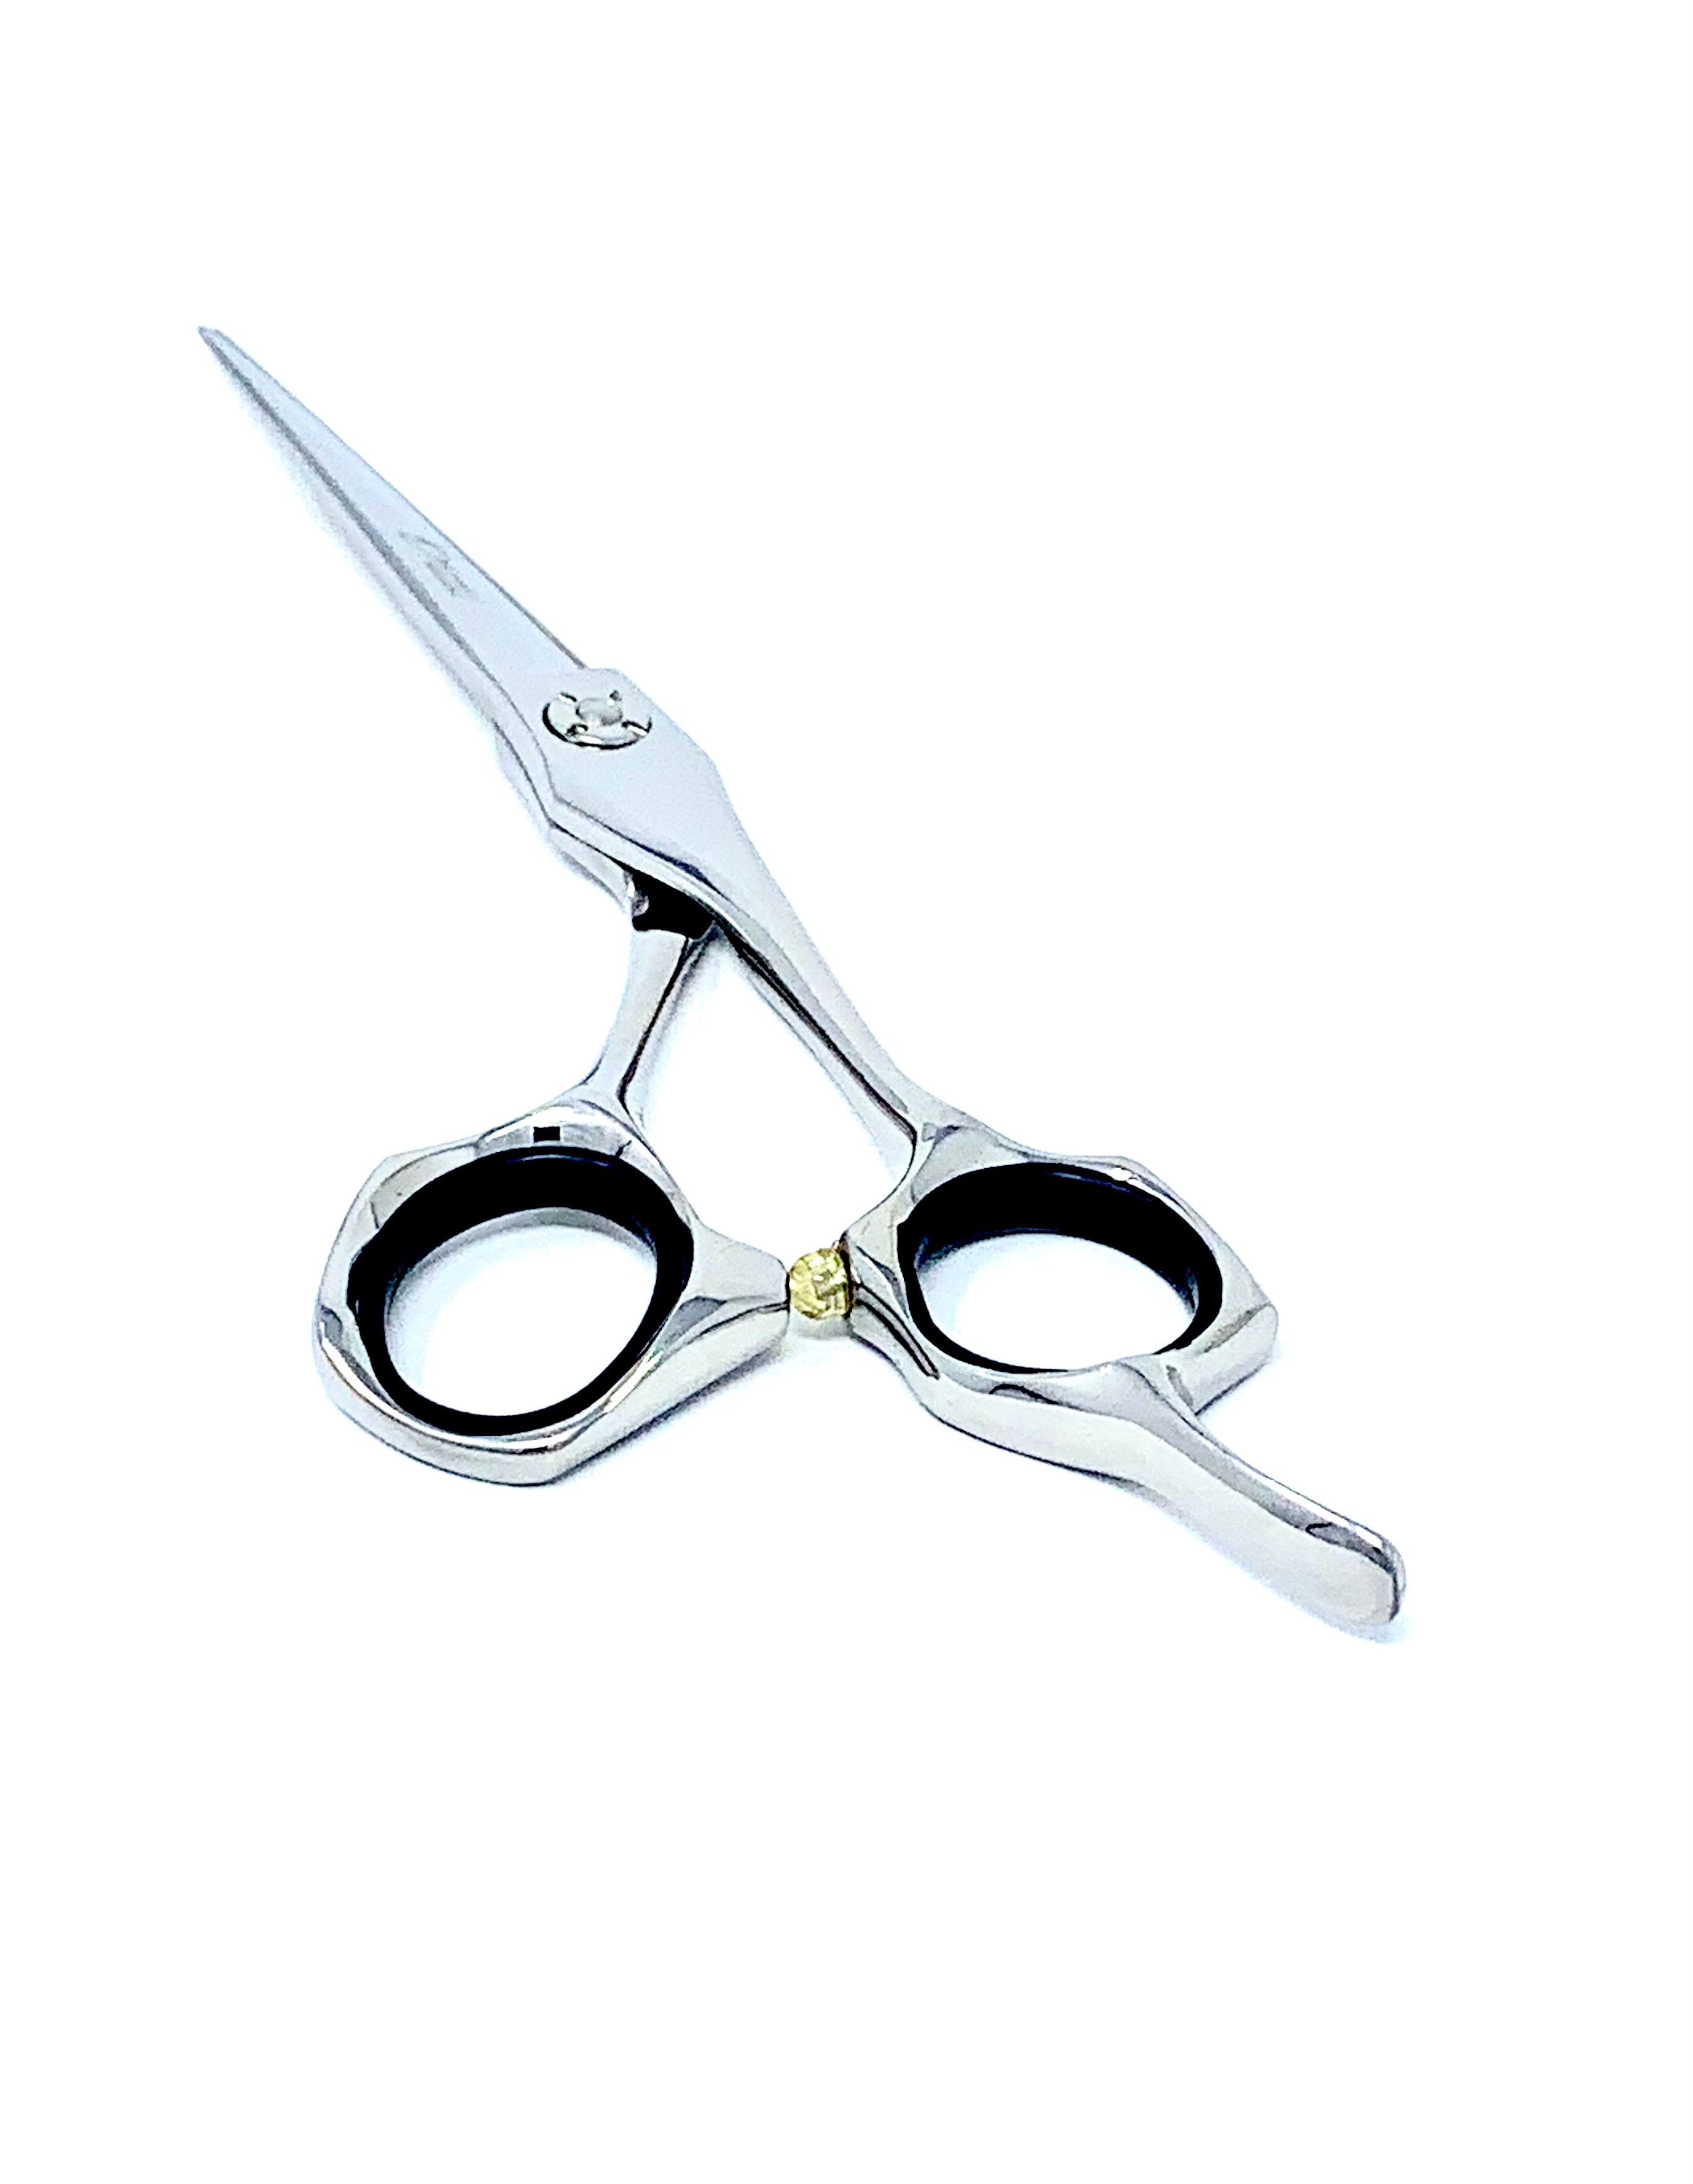 Coronet 15 Way House Shears Scissors New in Box Stainless Steel